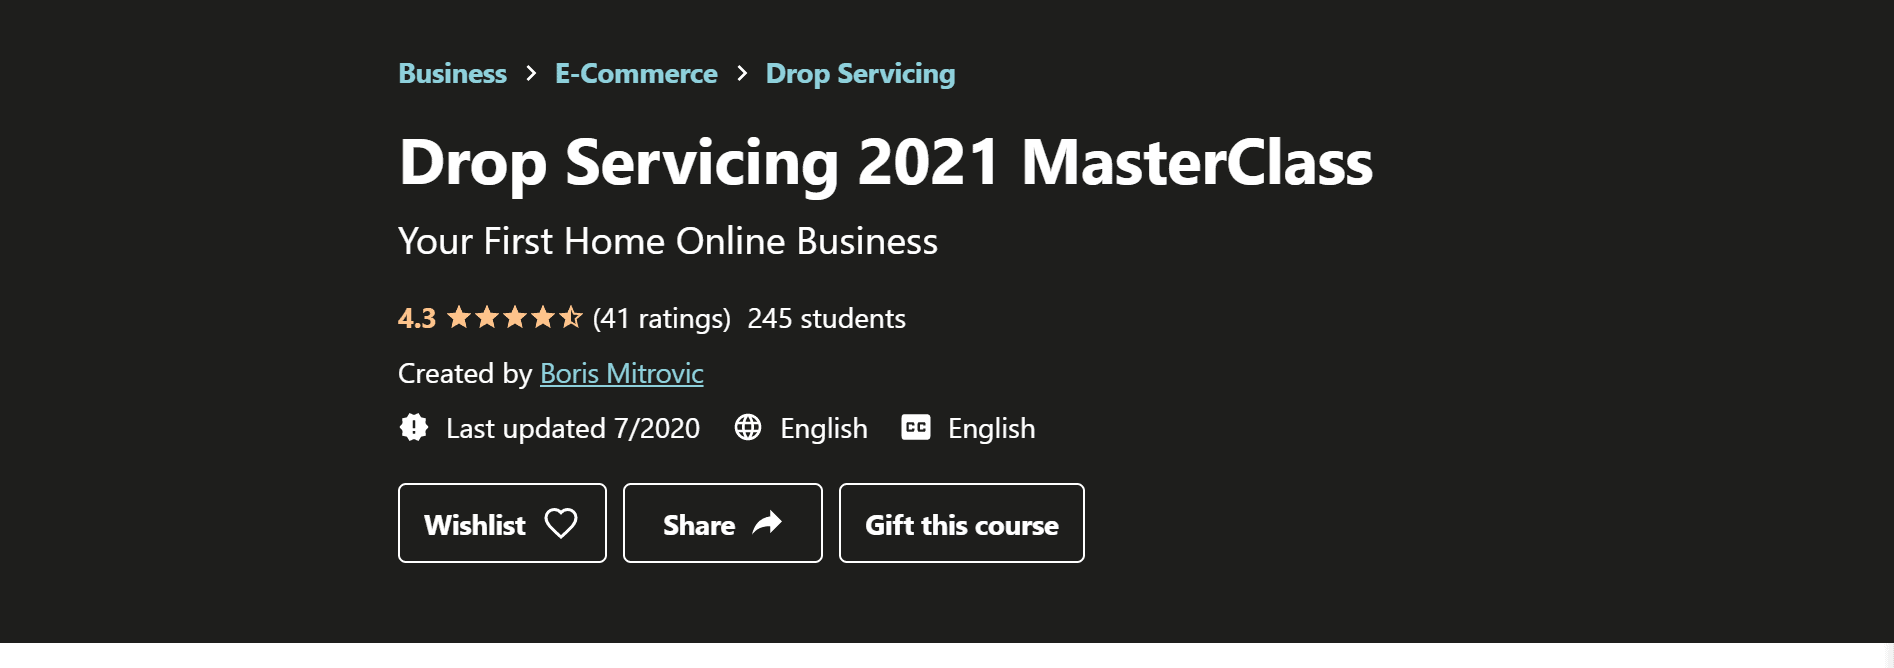 Drop servicing masterclass- best courses for drop service